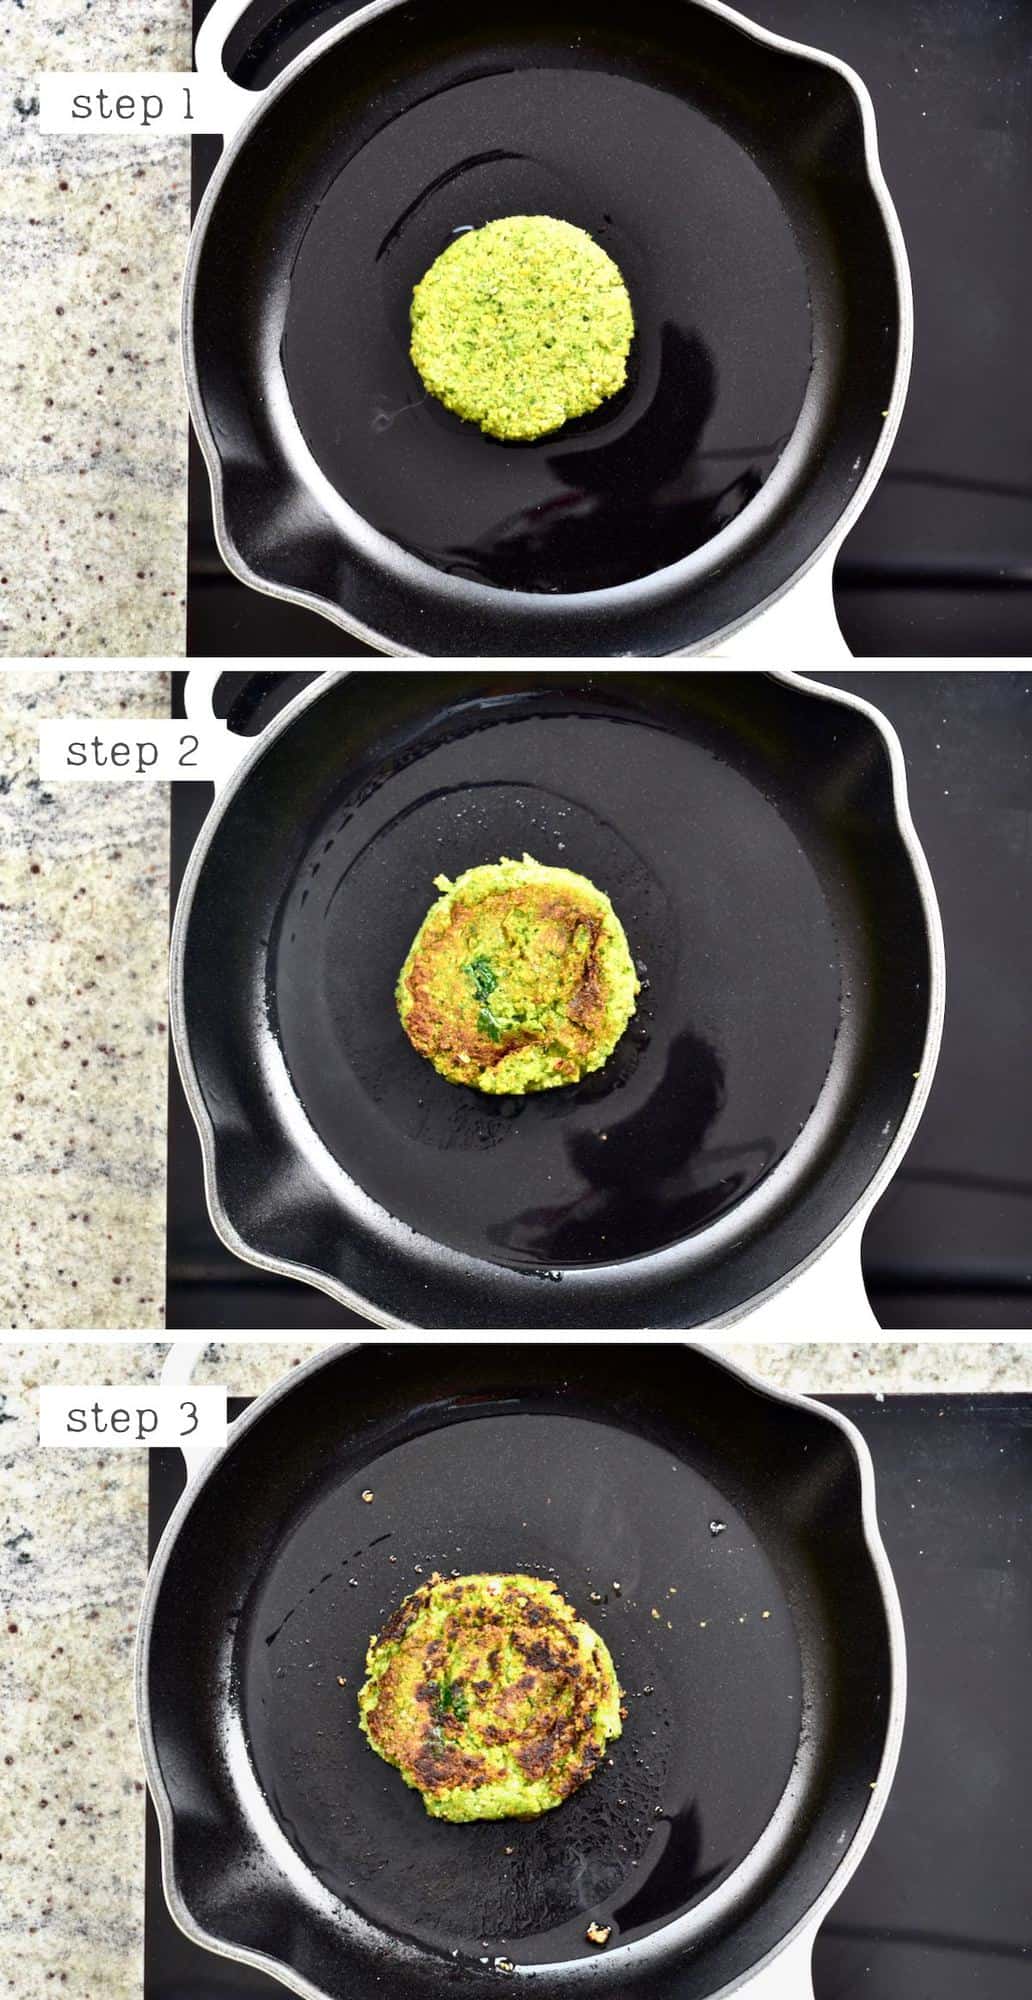 Steps for frying falafel patties